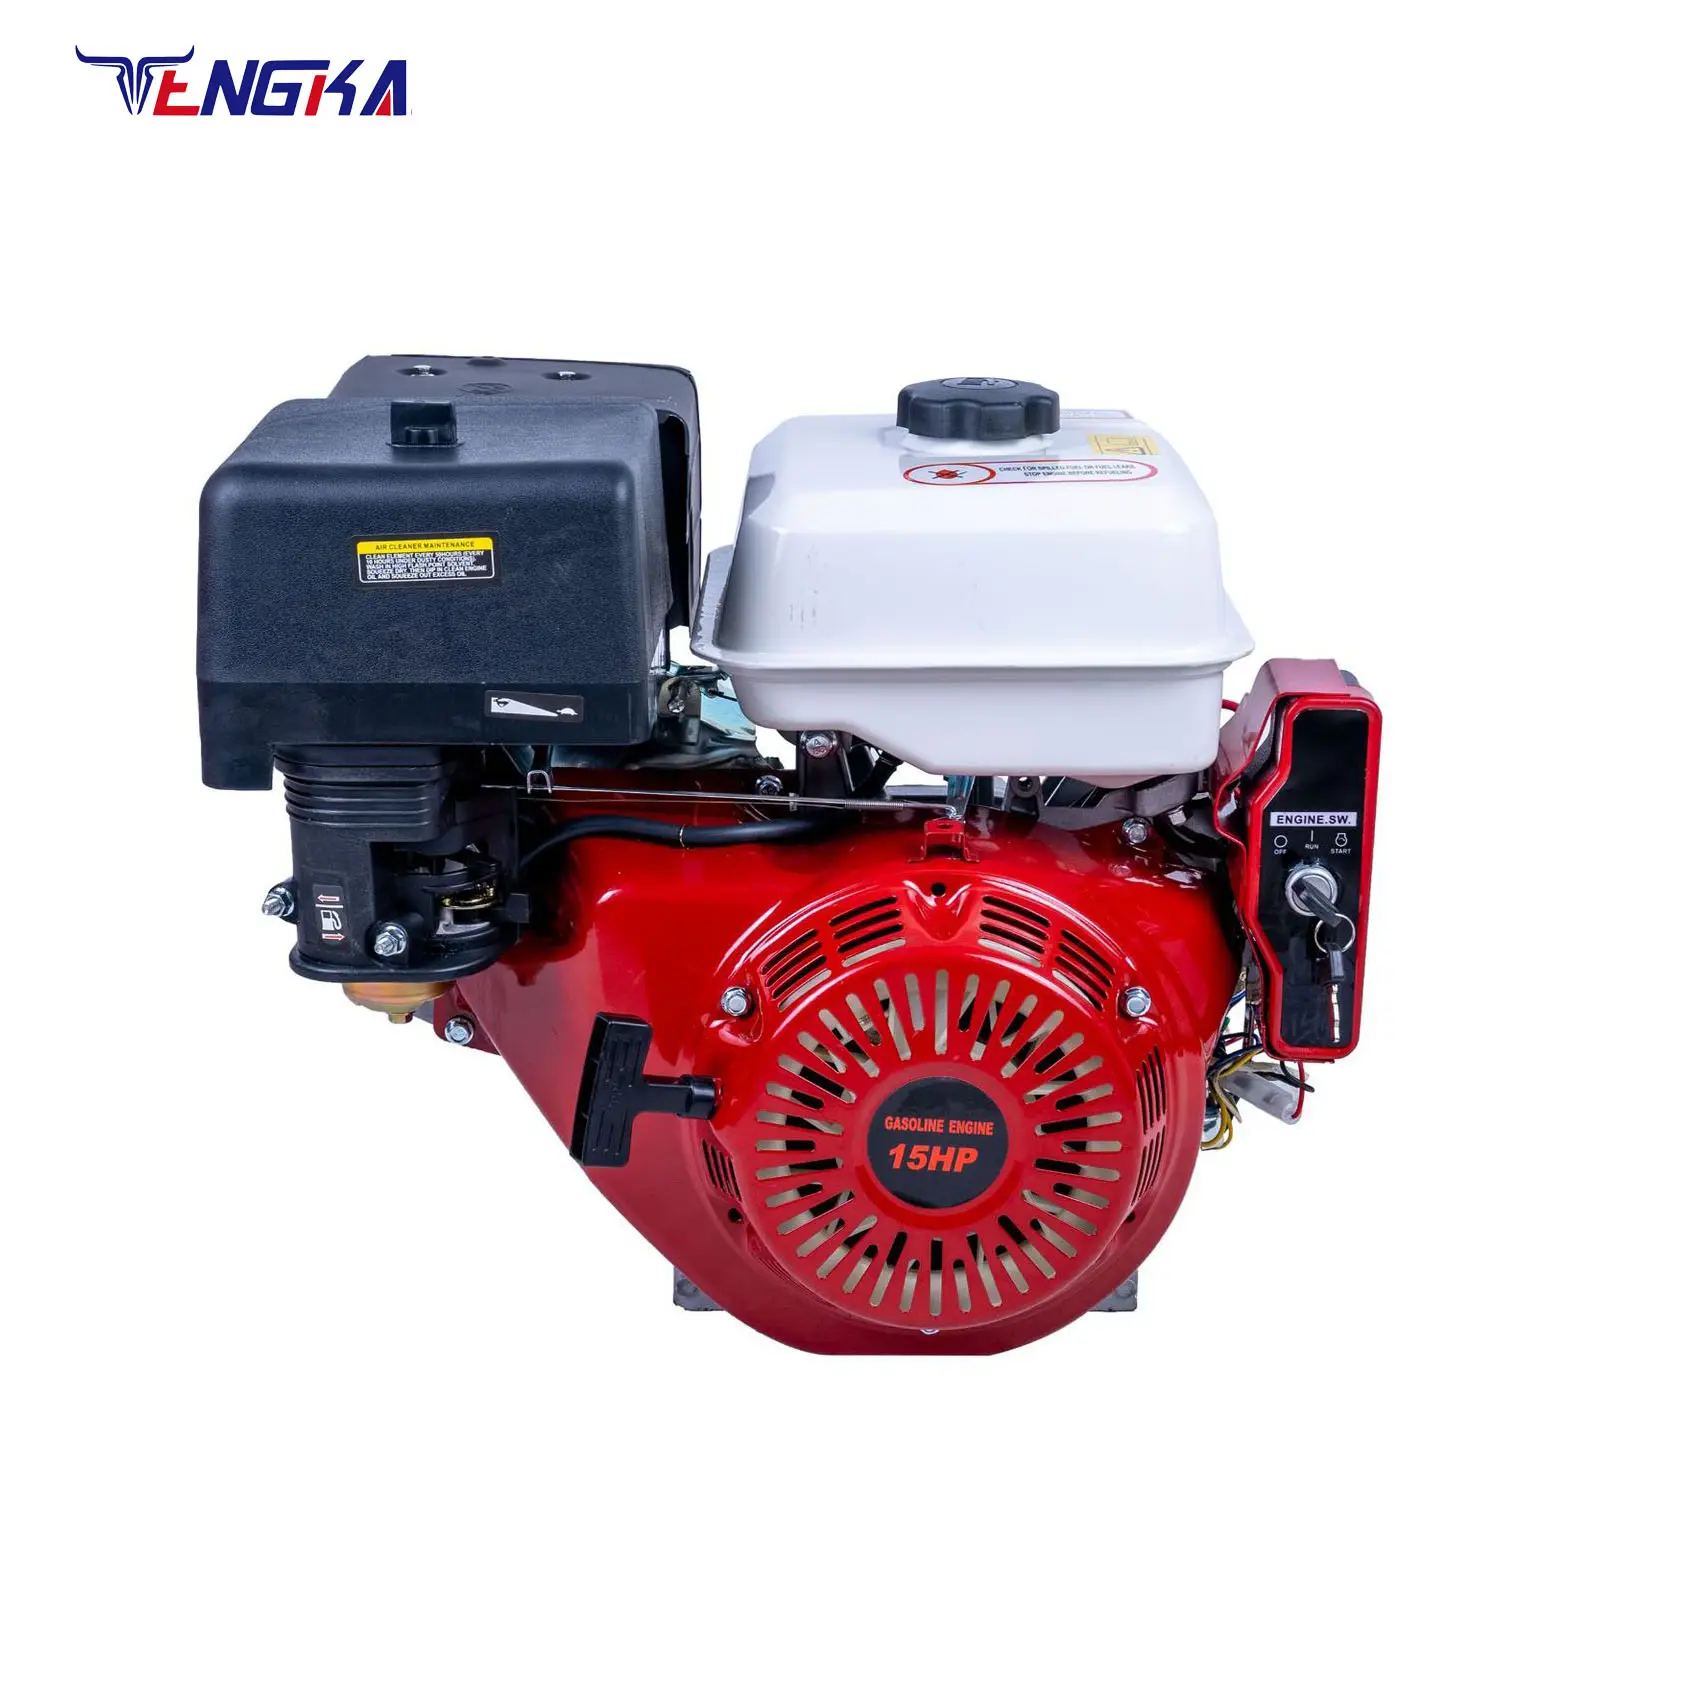 Top Qualität Gx200 168f-1 4-Takt 196 Ccm 6,5 PS Benzinmotor zu verkaufen